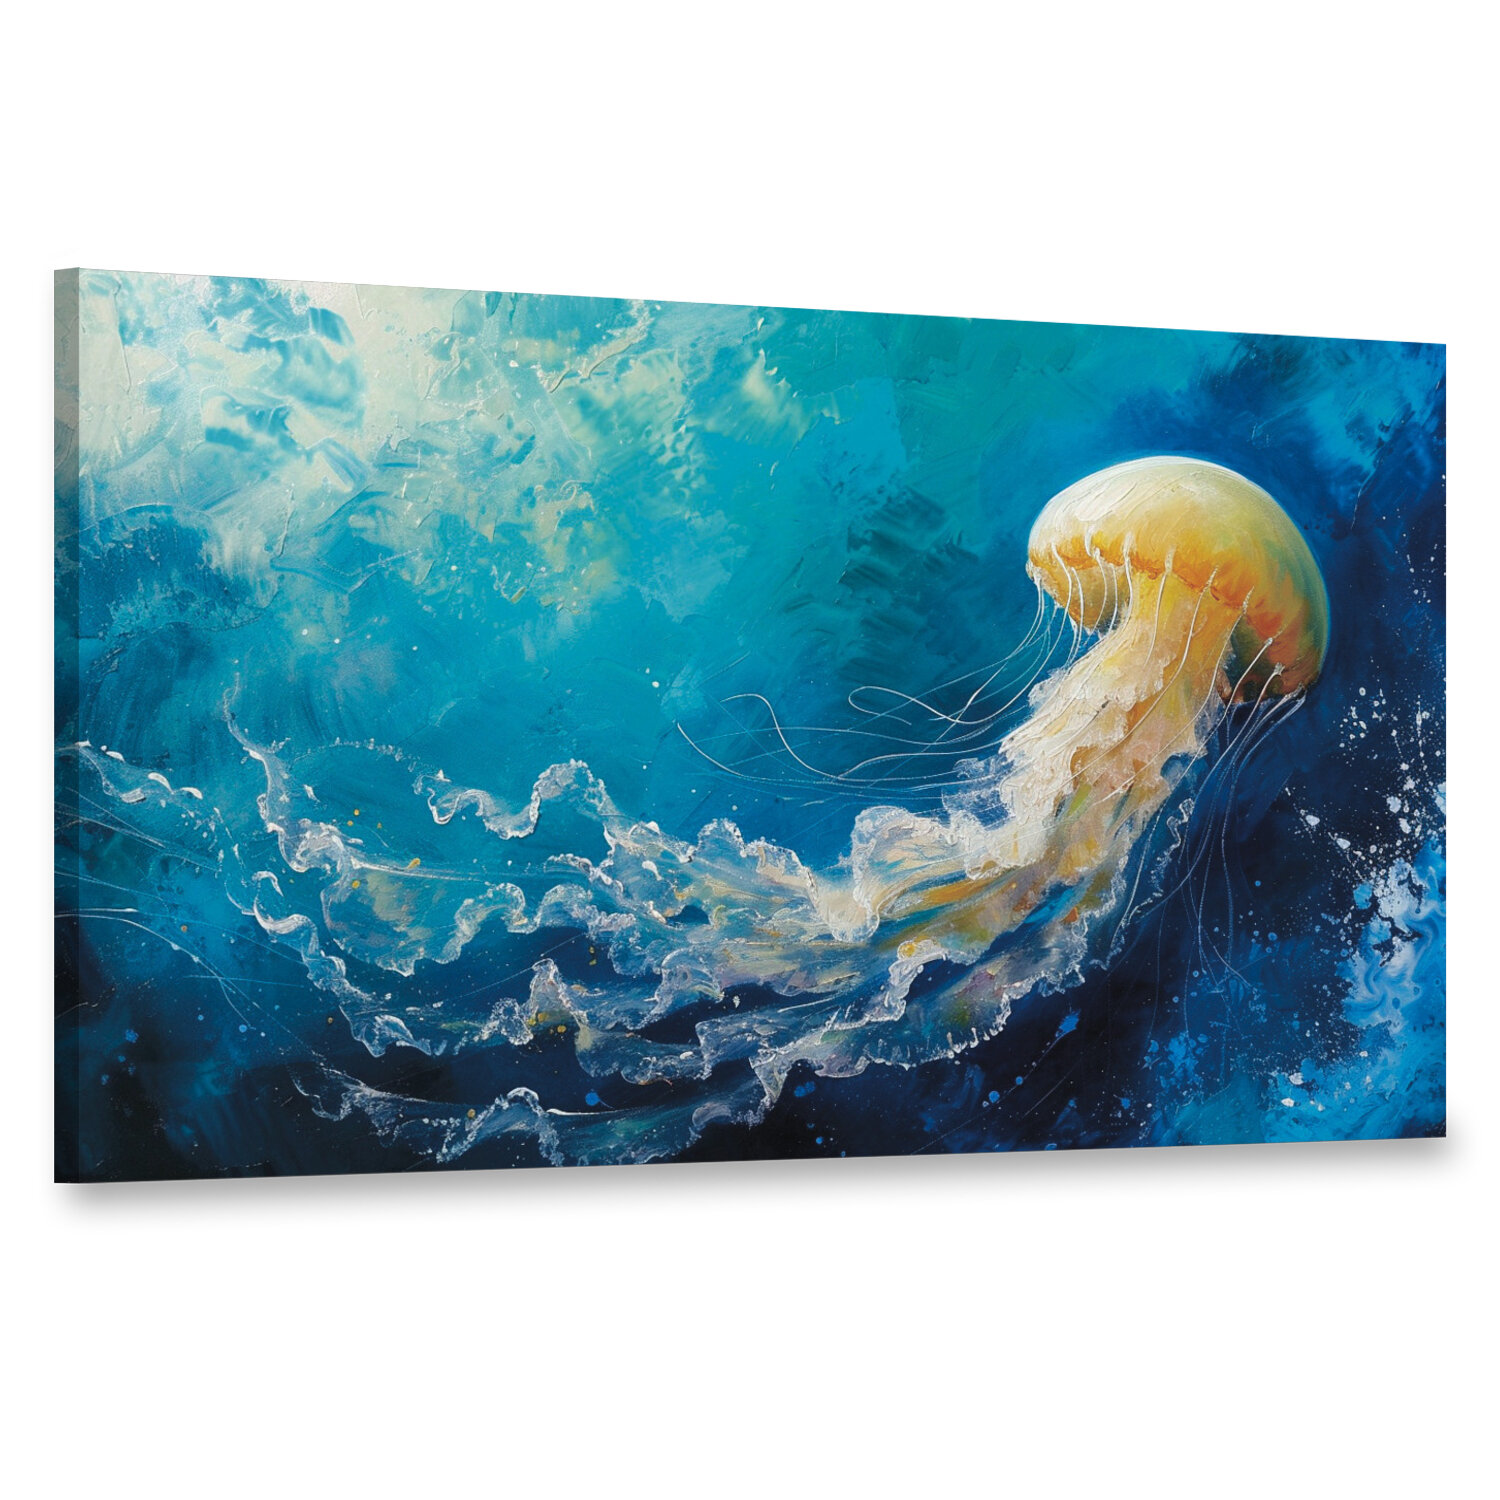 Интерьерная картина 100х60 "Медуза в синих волнах"